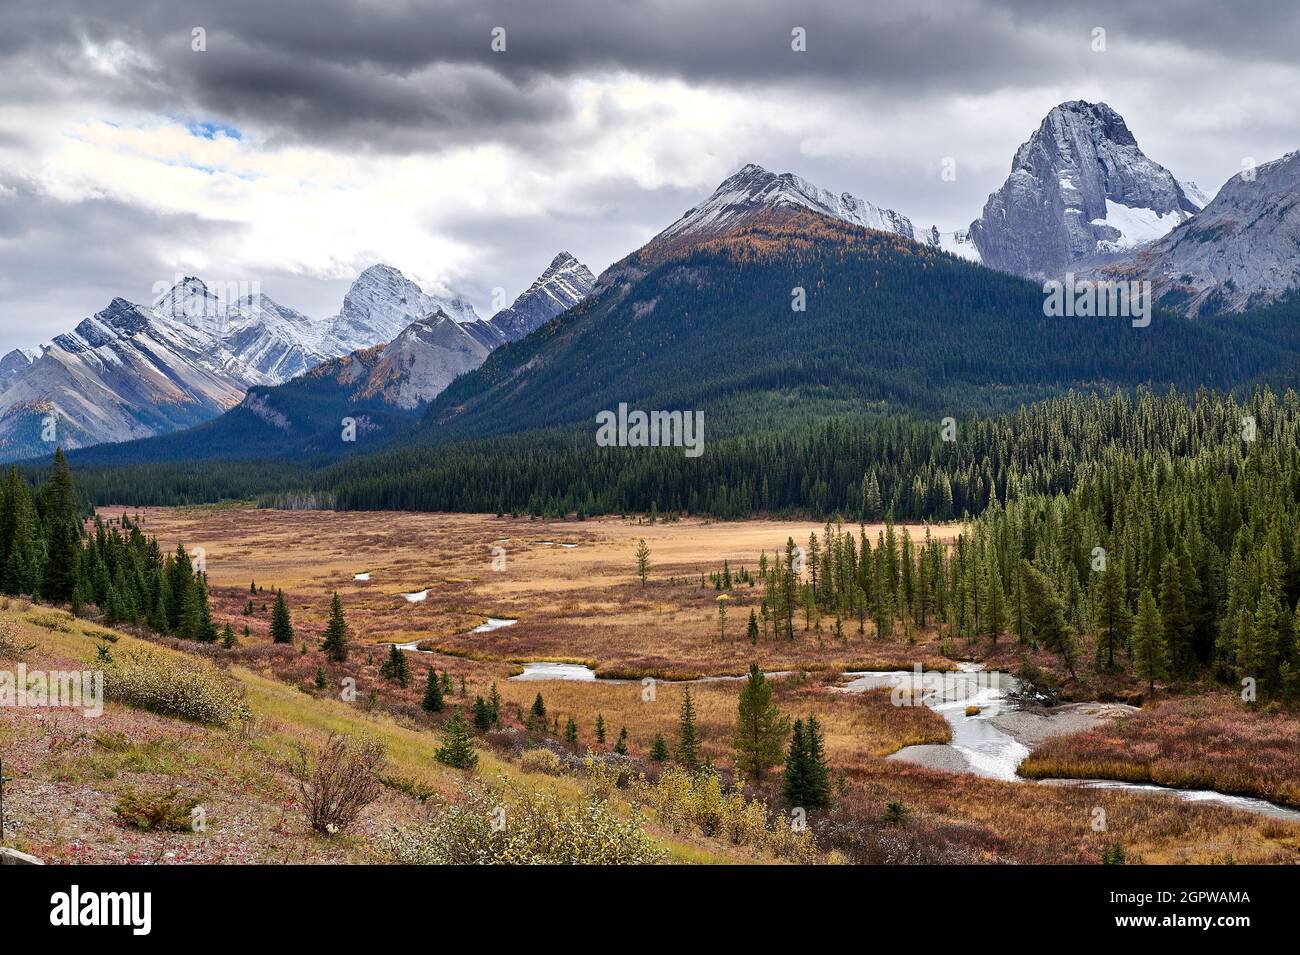 Mountains (L to R) Mount Murray, Mount French, Mount Burstall Commonweath Peak, Spray Valley Provincial Park, Kananaskis Country, Alberta, Canada, Stock Photo